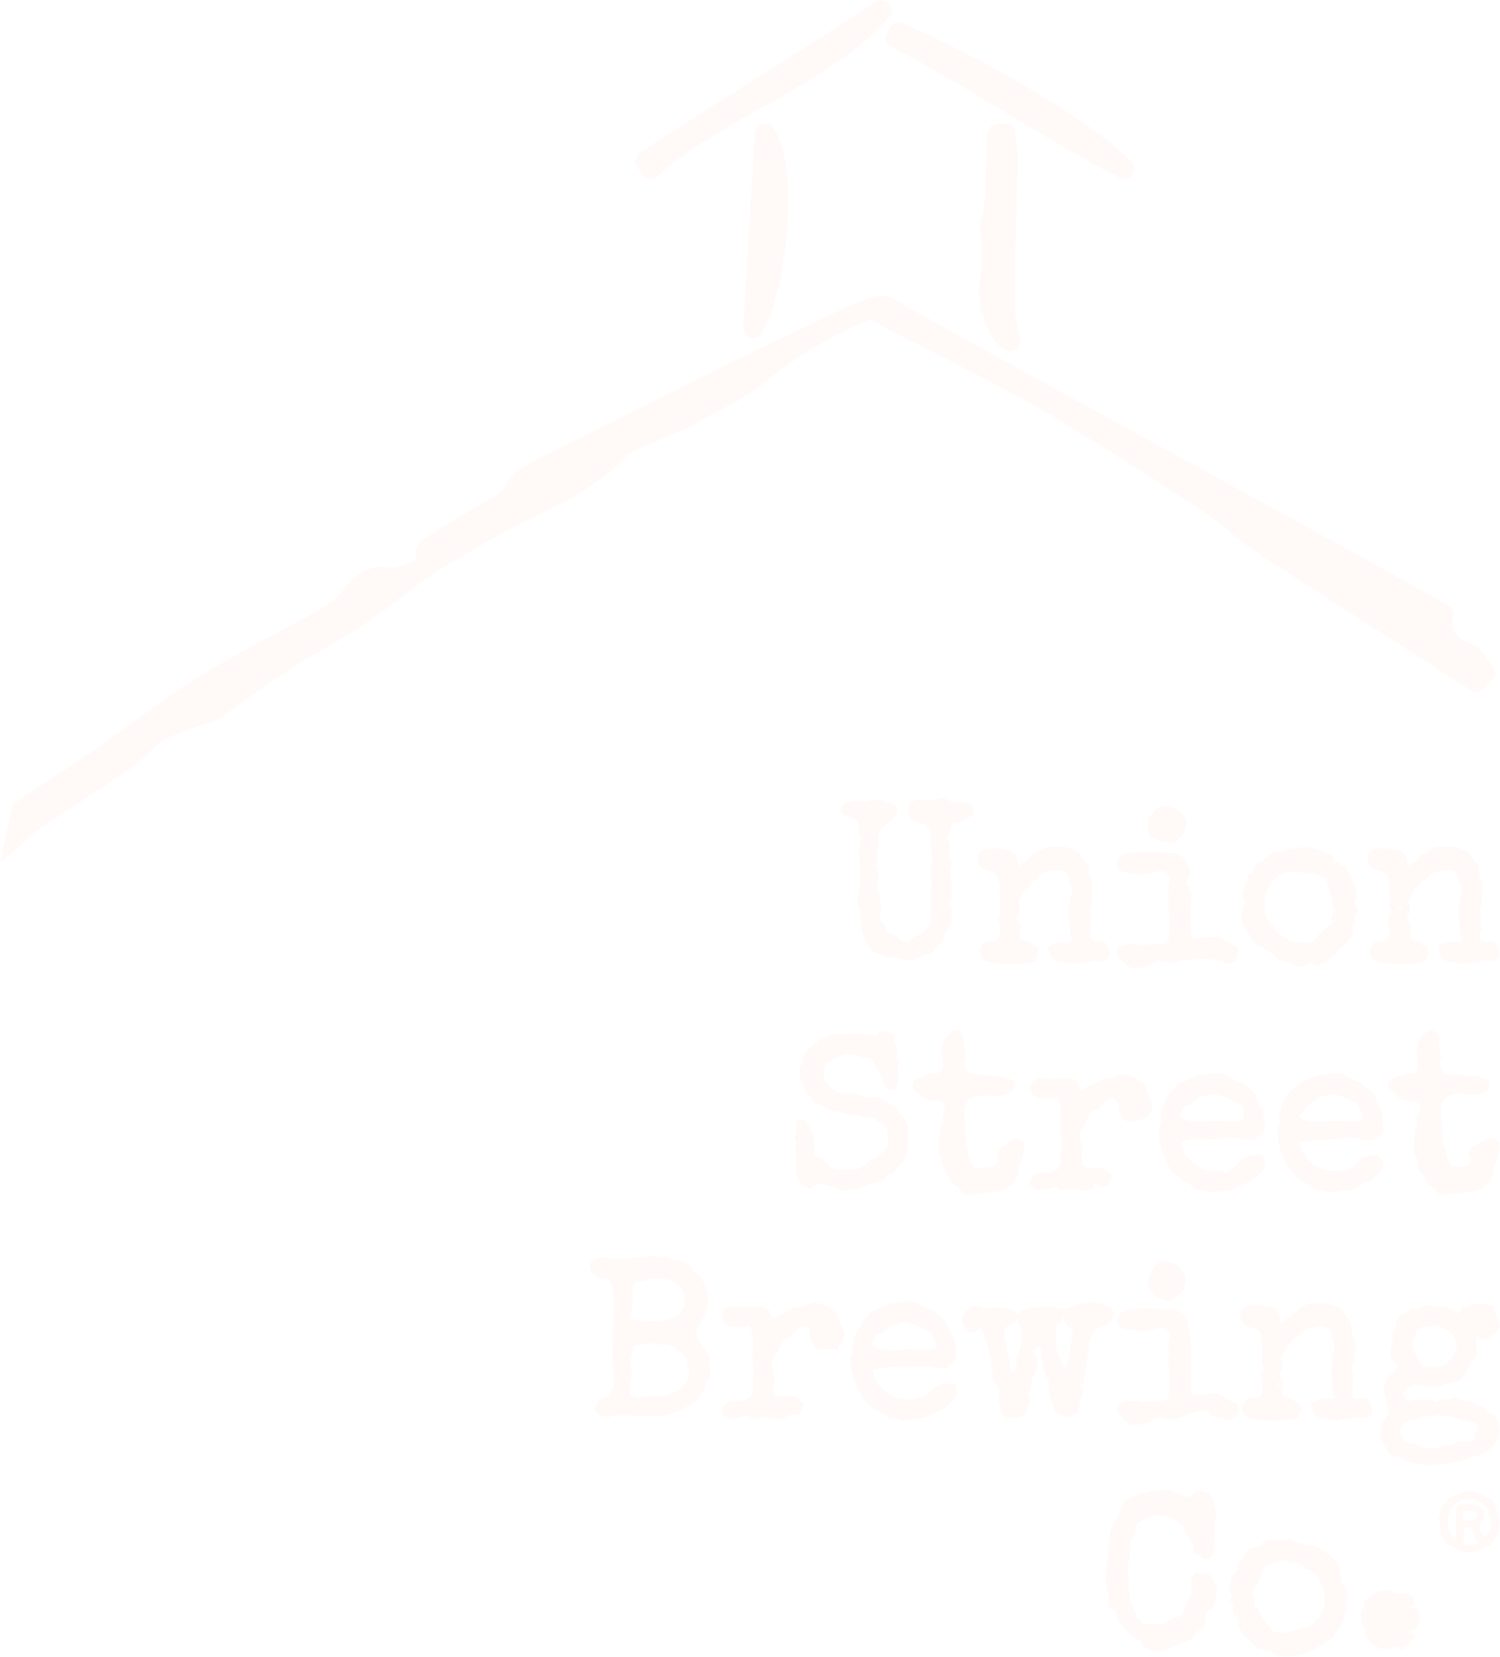 Union Street Brewing Co.